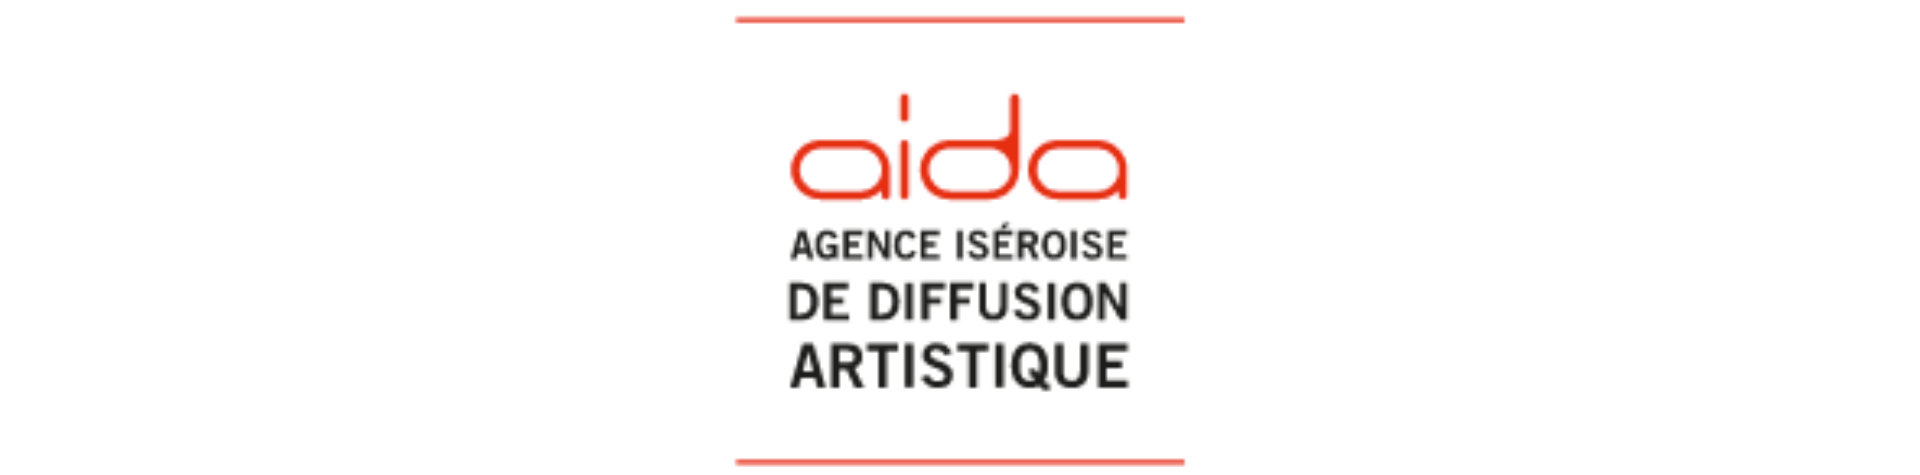 AIDA - Agence Iséroise de Diffusion Artistique